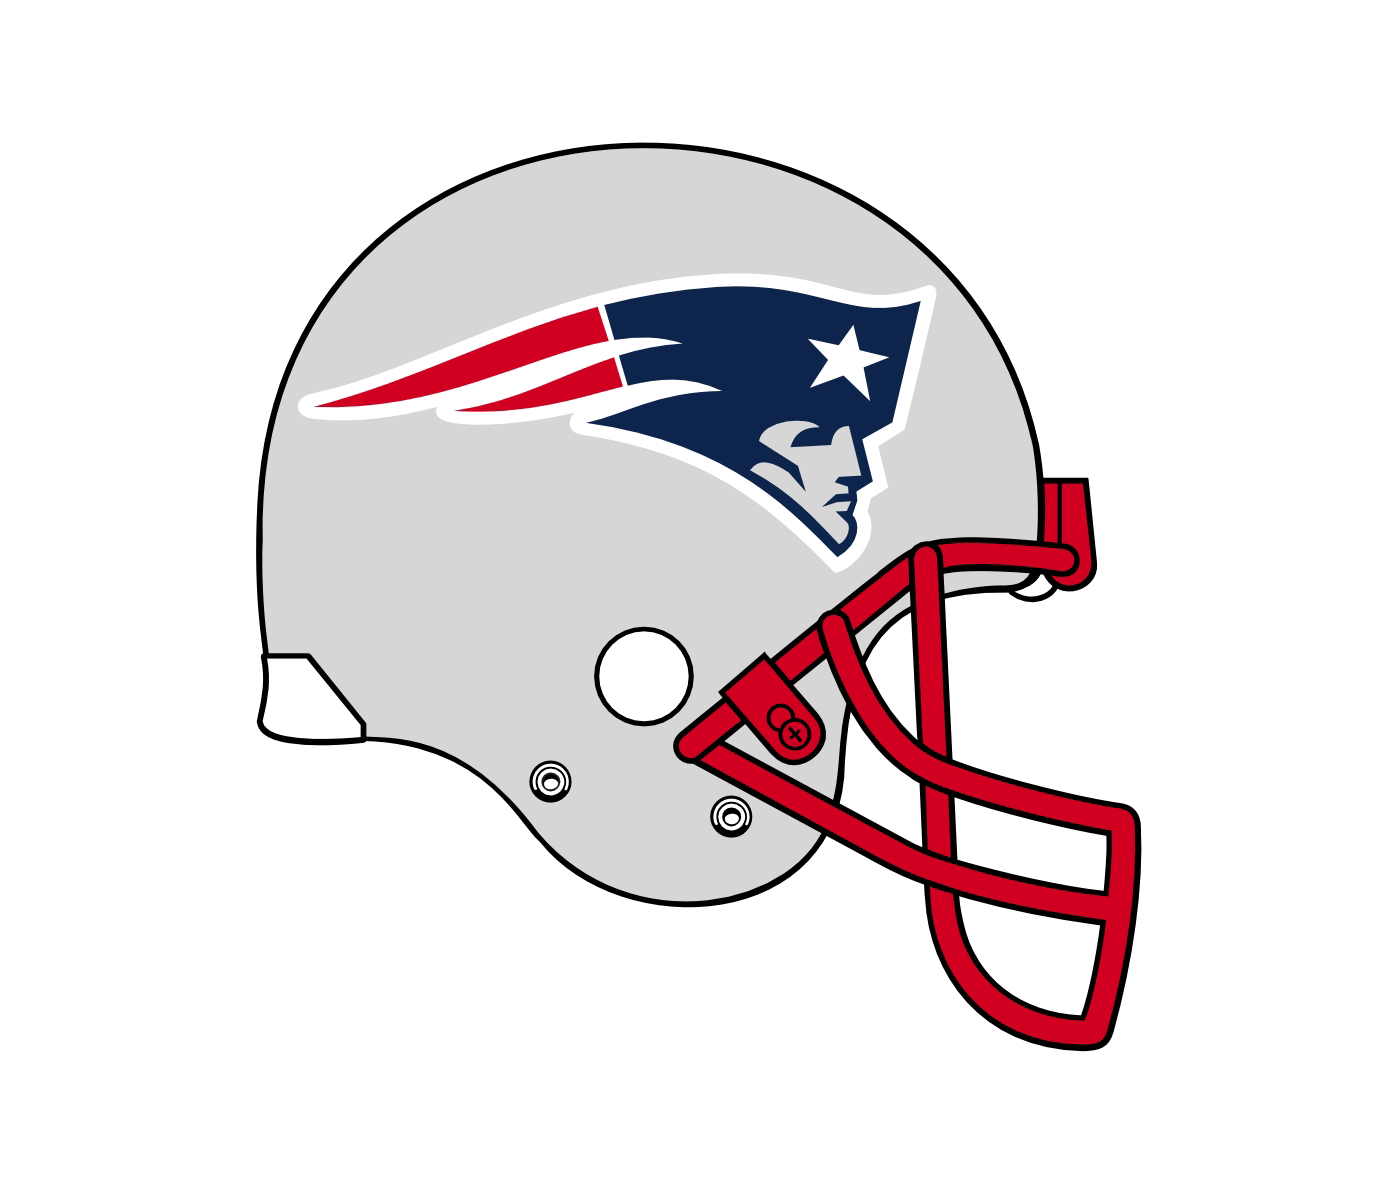 2018 Patriots Logo - New England Patriots 2018 NFL Draft profile • The Game Haus